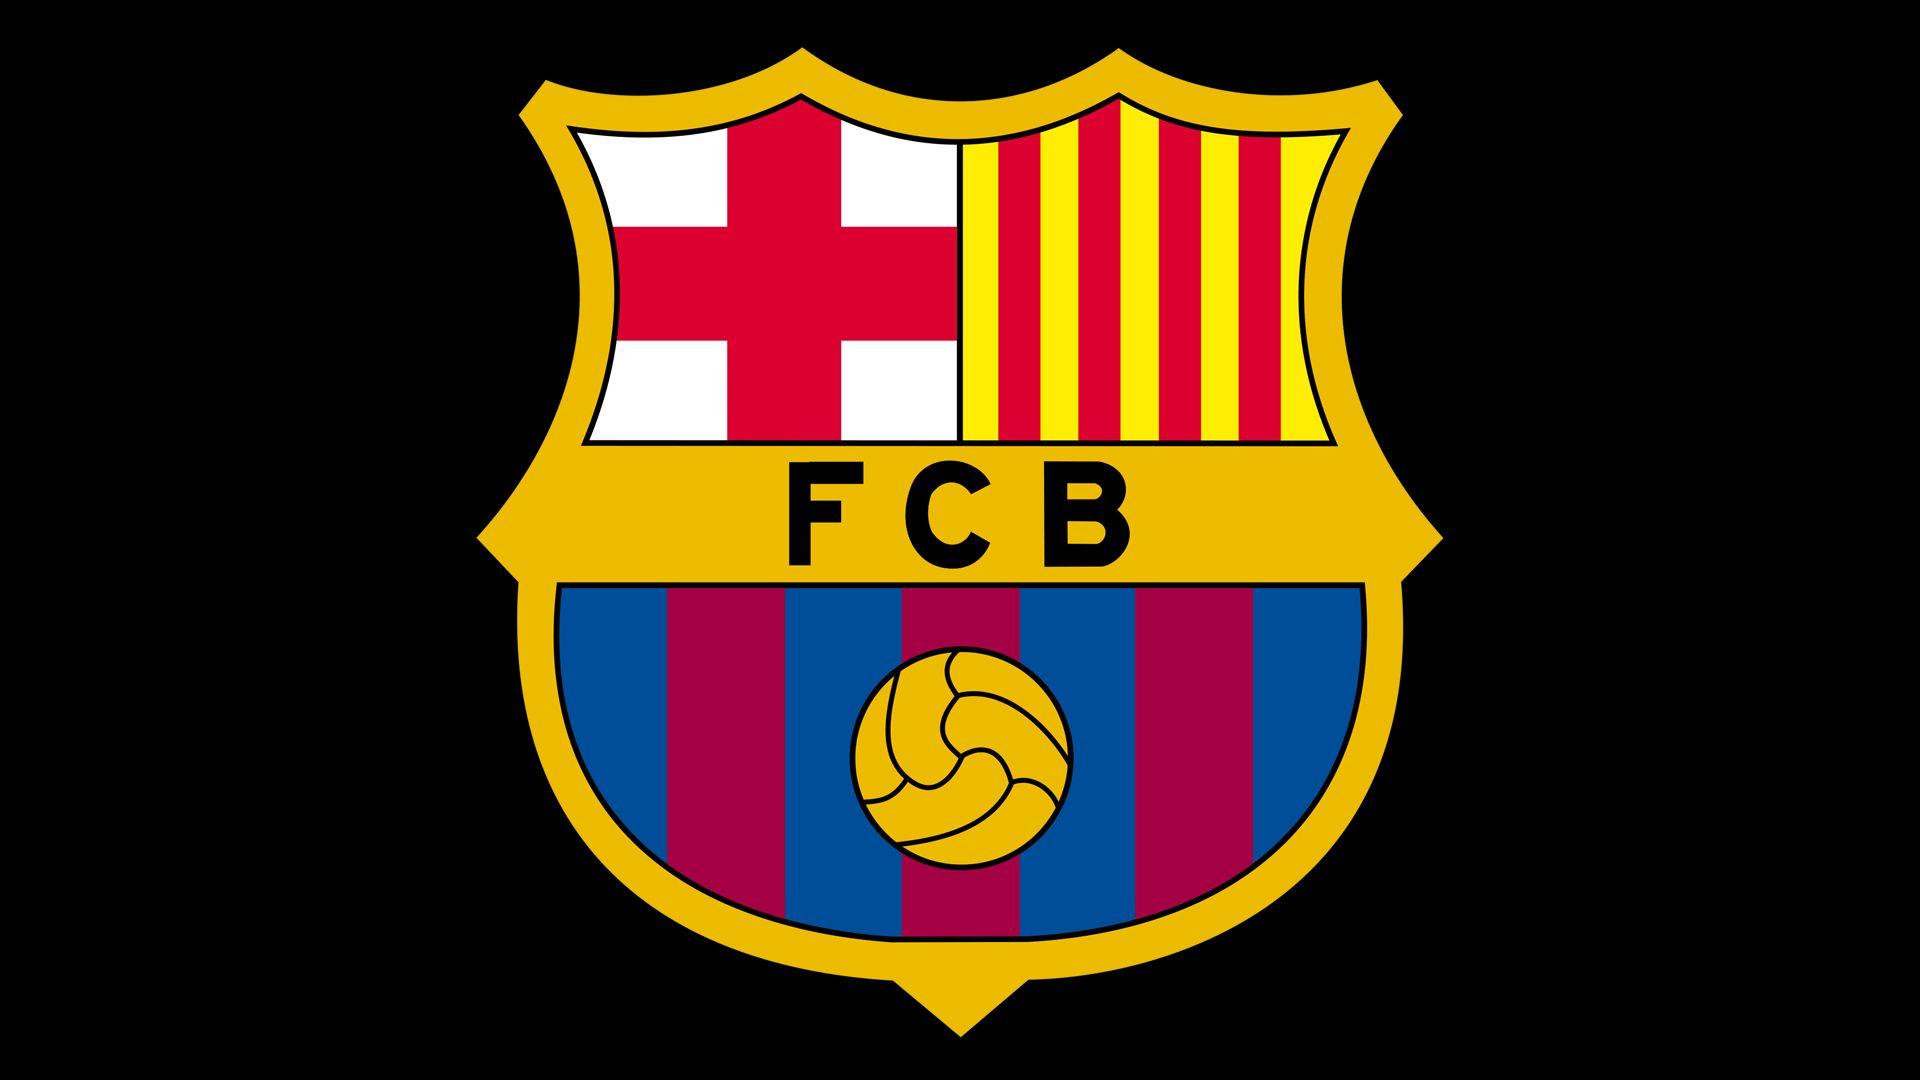 FCB Logo - Barcelona Logo, Barcelona Symbol Meaning, History and Evolution